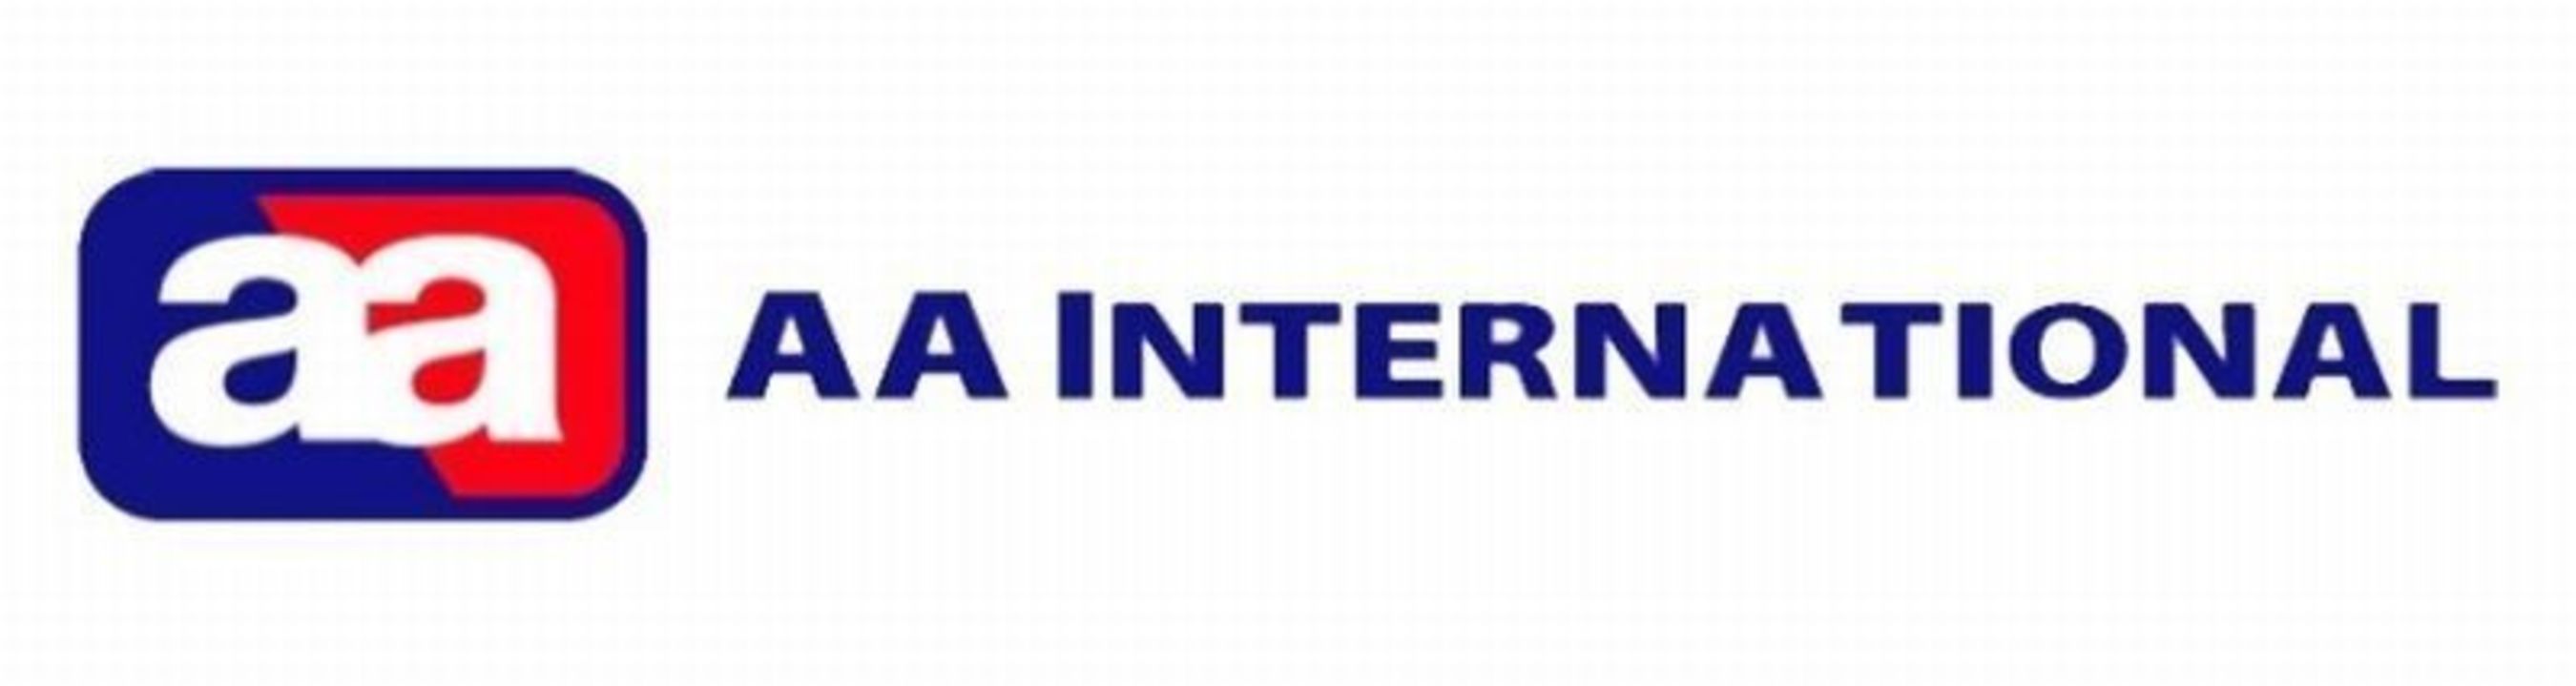 AA International Logo (PRNewsFoto/C6 Intelligence)